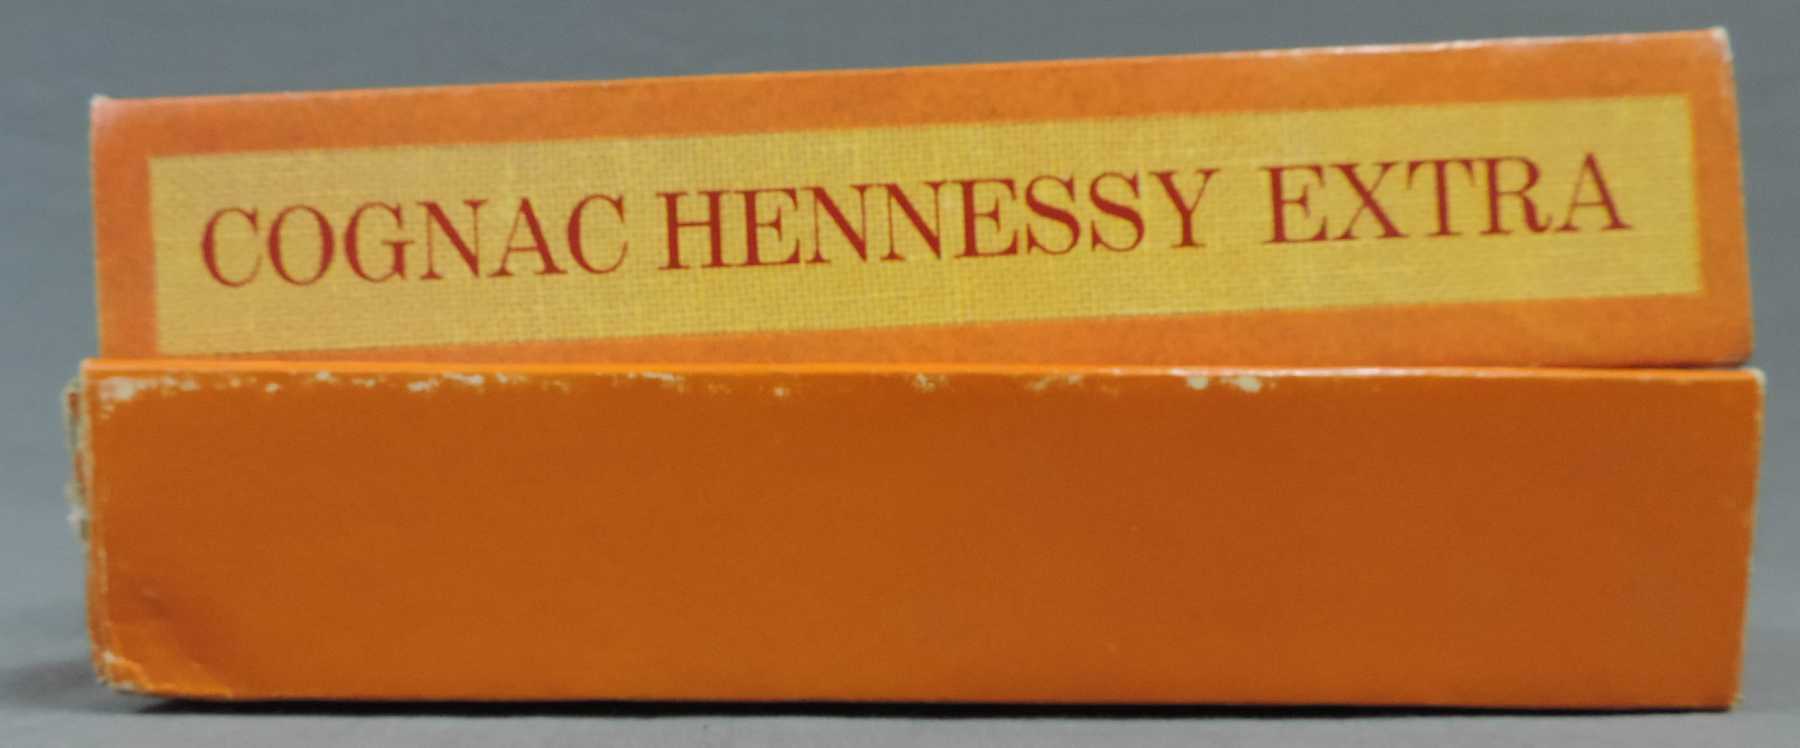 Hennessy Extra Cognac, France. 750ml. Im original Karton. Hennessy Extra Cognac, France. 750ml. - Image 4 of 8